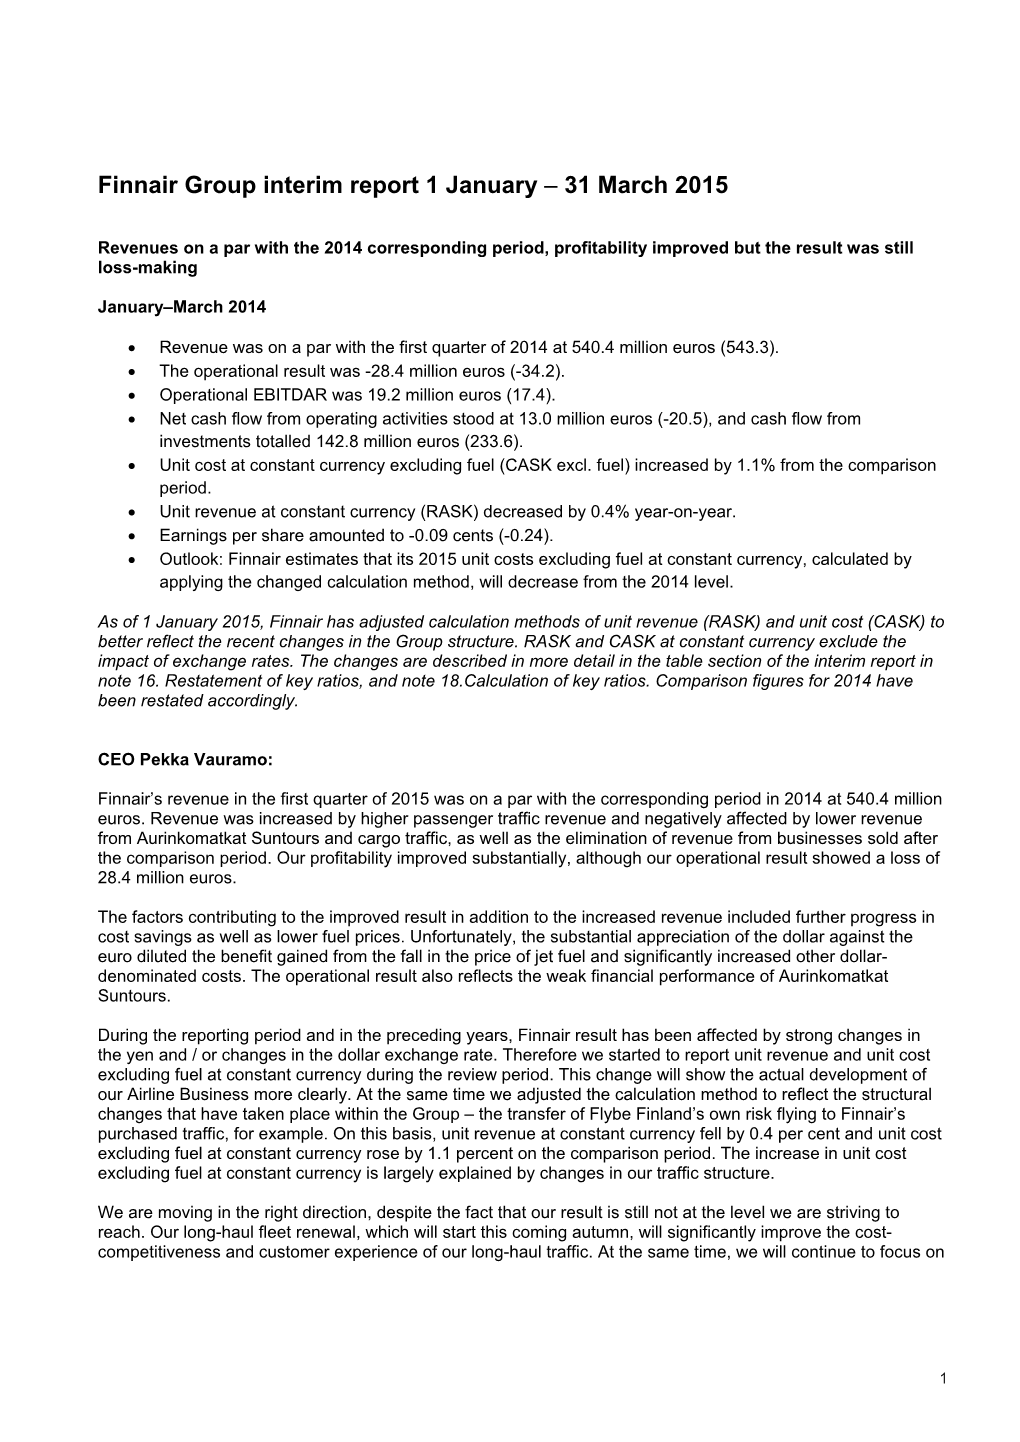 Finnair Group Interim Report 1 January – 31 March 2015